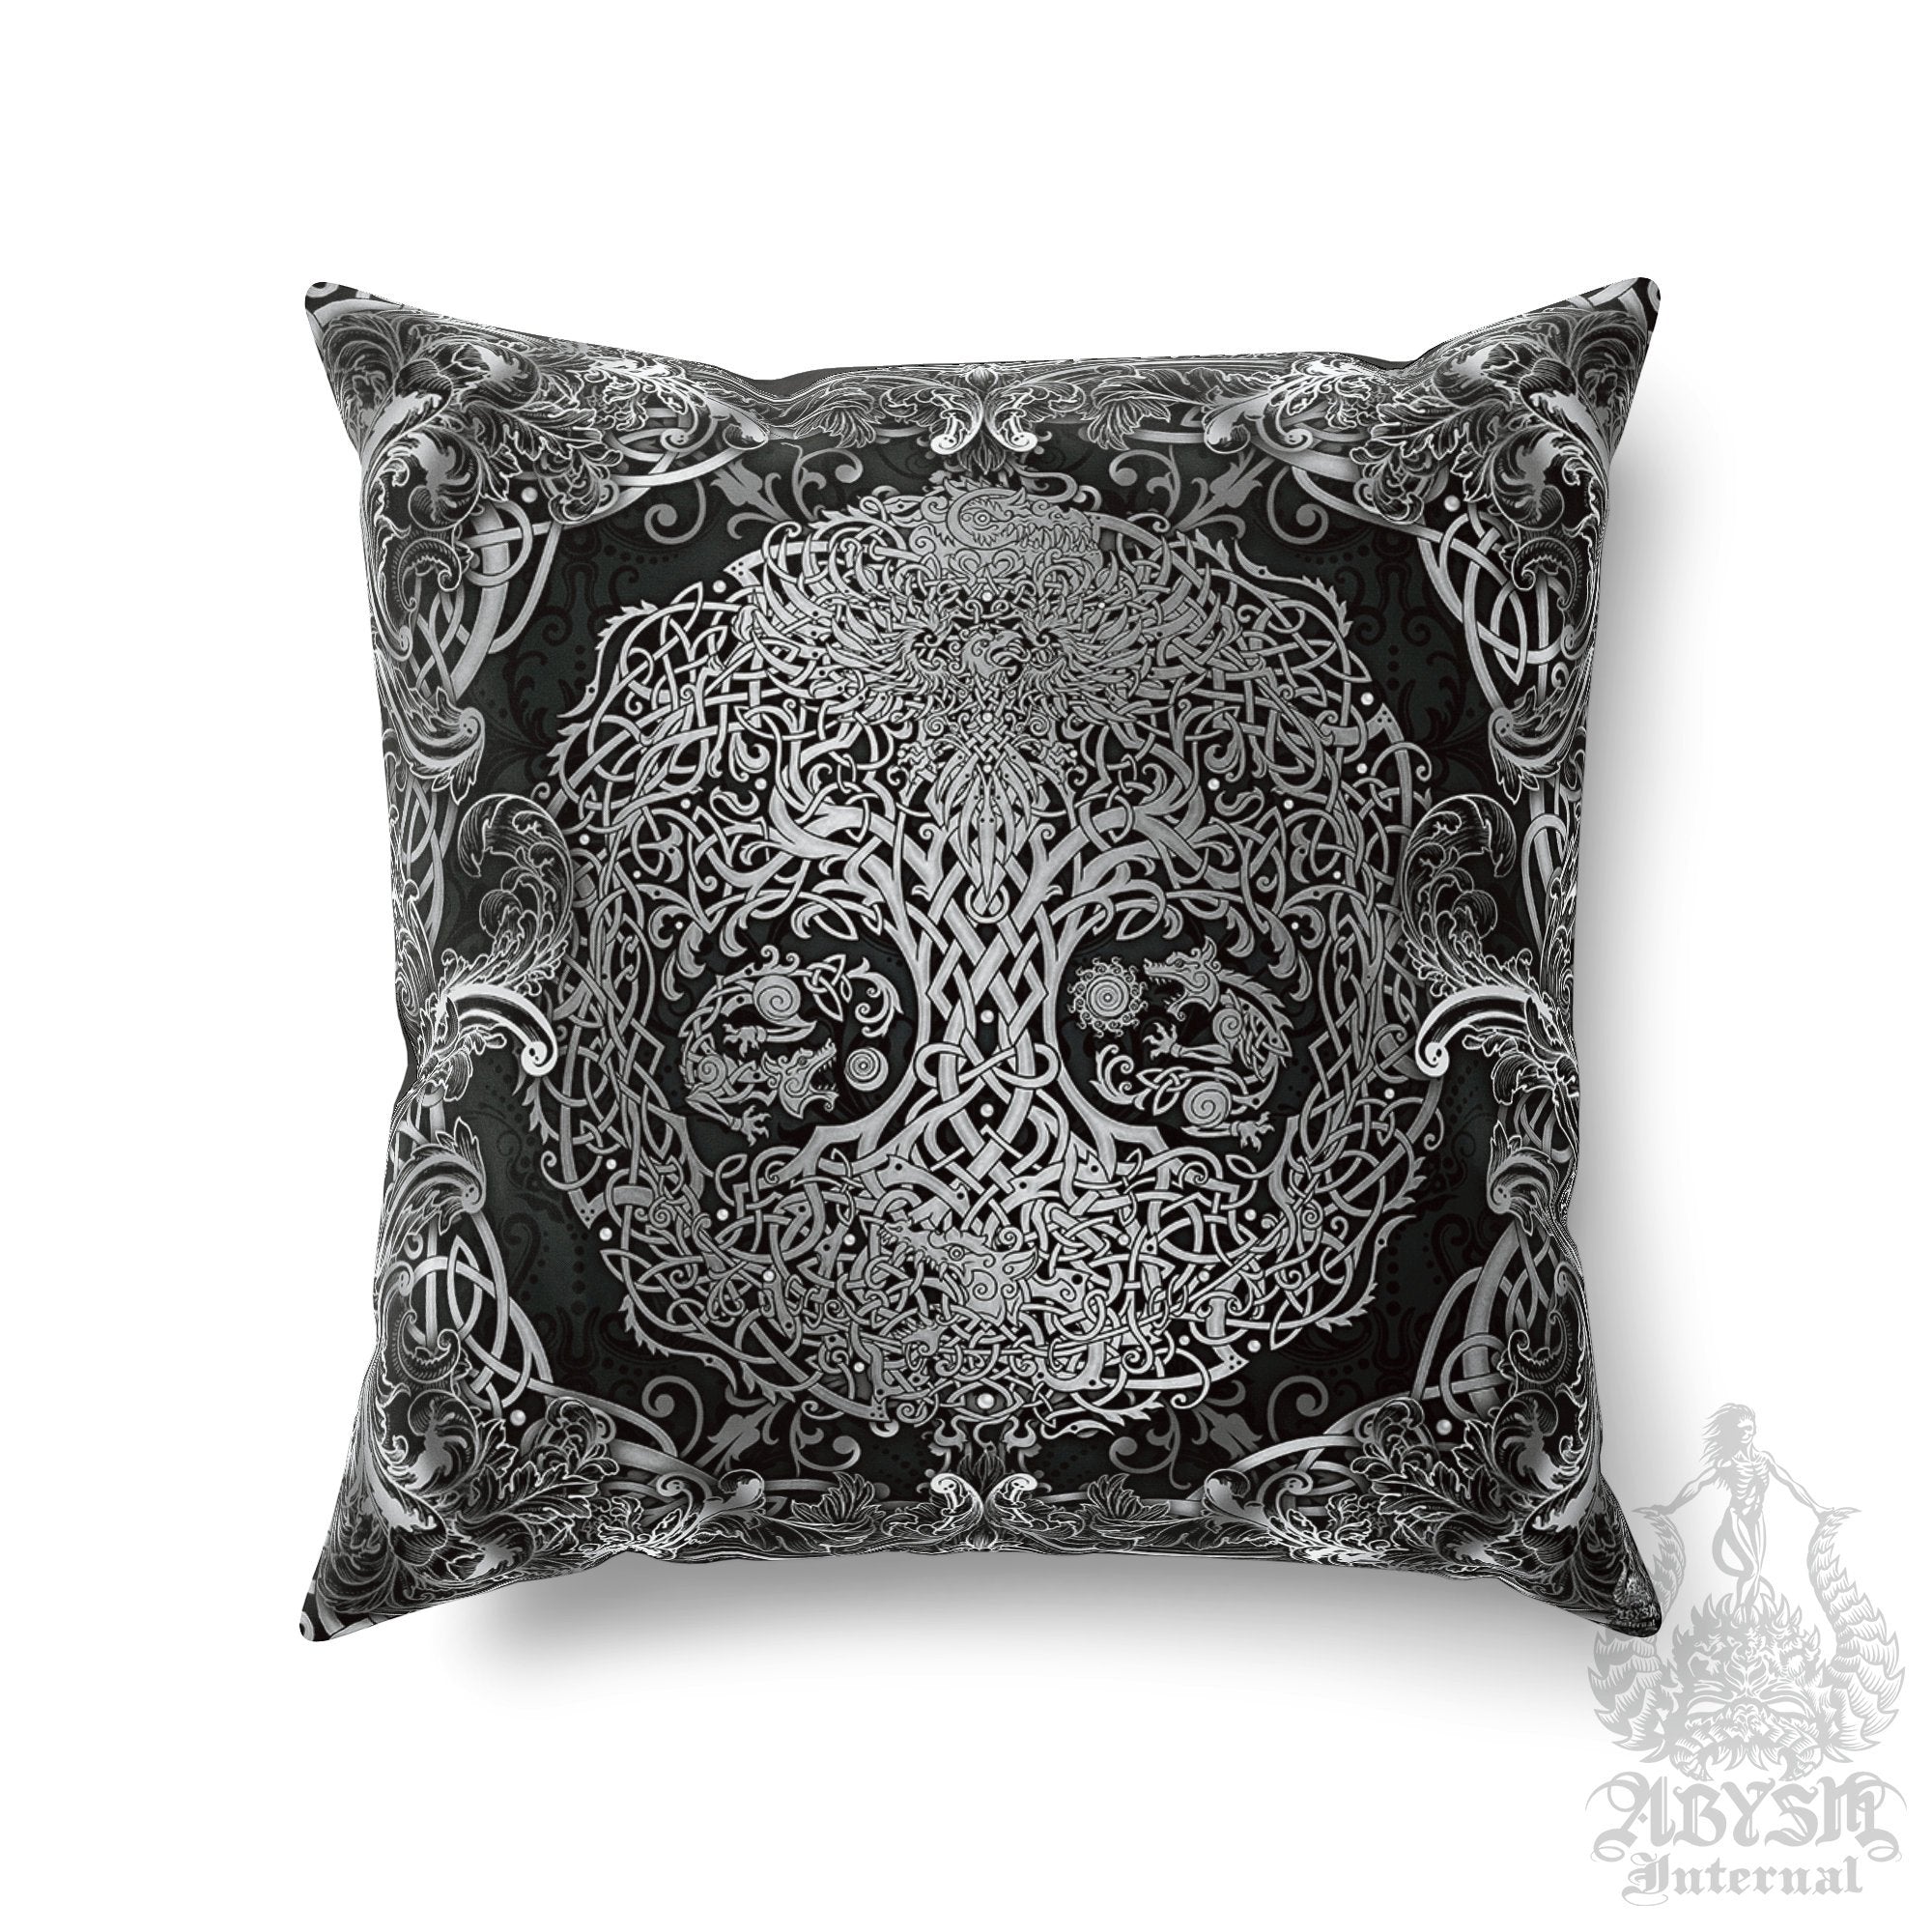 Viking Throw Pillow, Decorative Accent Cushion, Yggdrasil, Norse Decor, Nordic Art, Alternative Home - Tree of Life, Dark - Abysm Internal